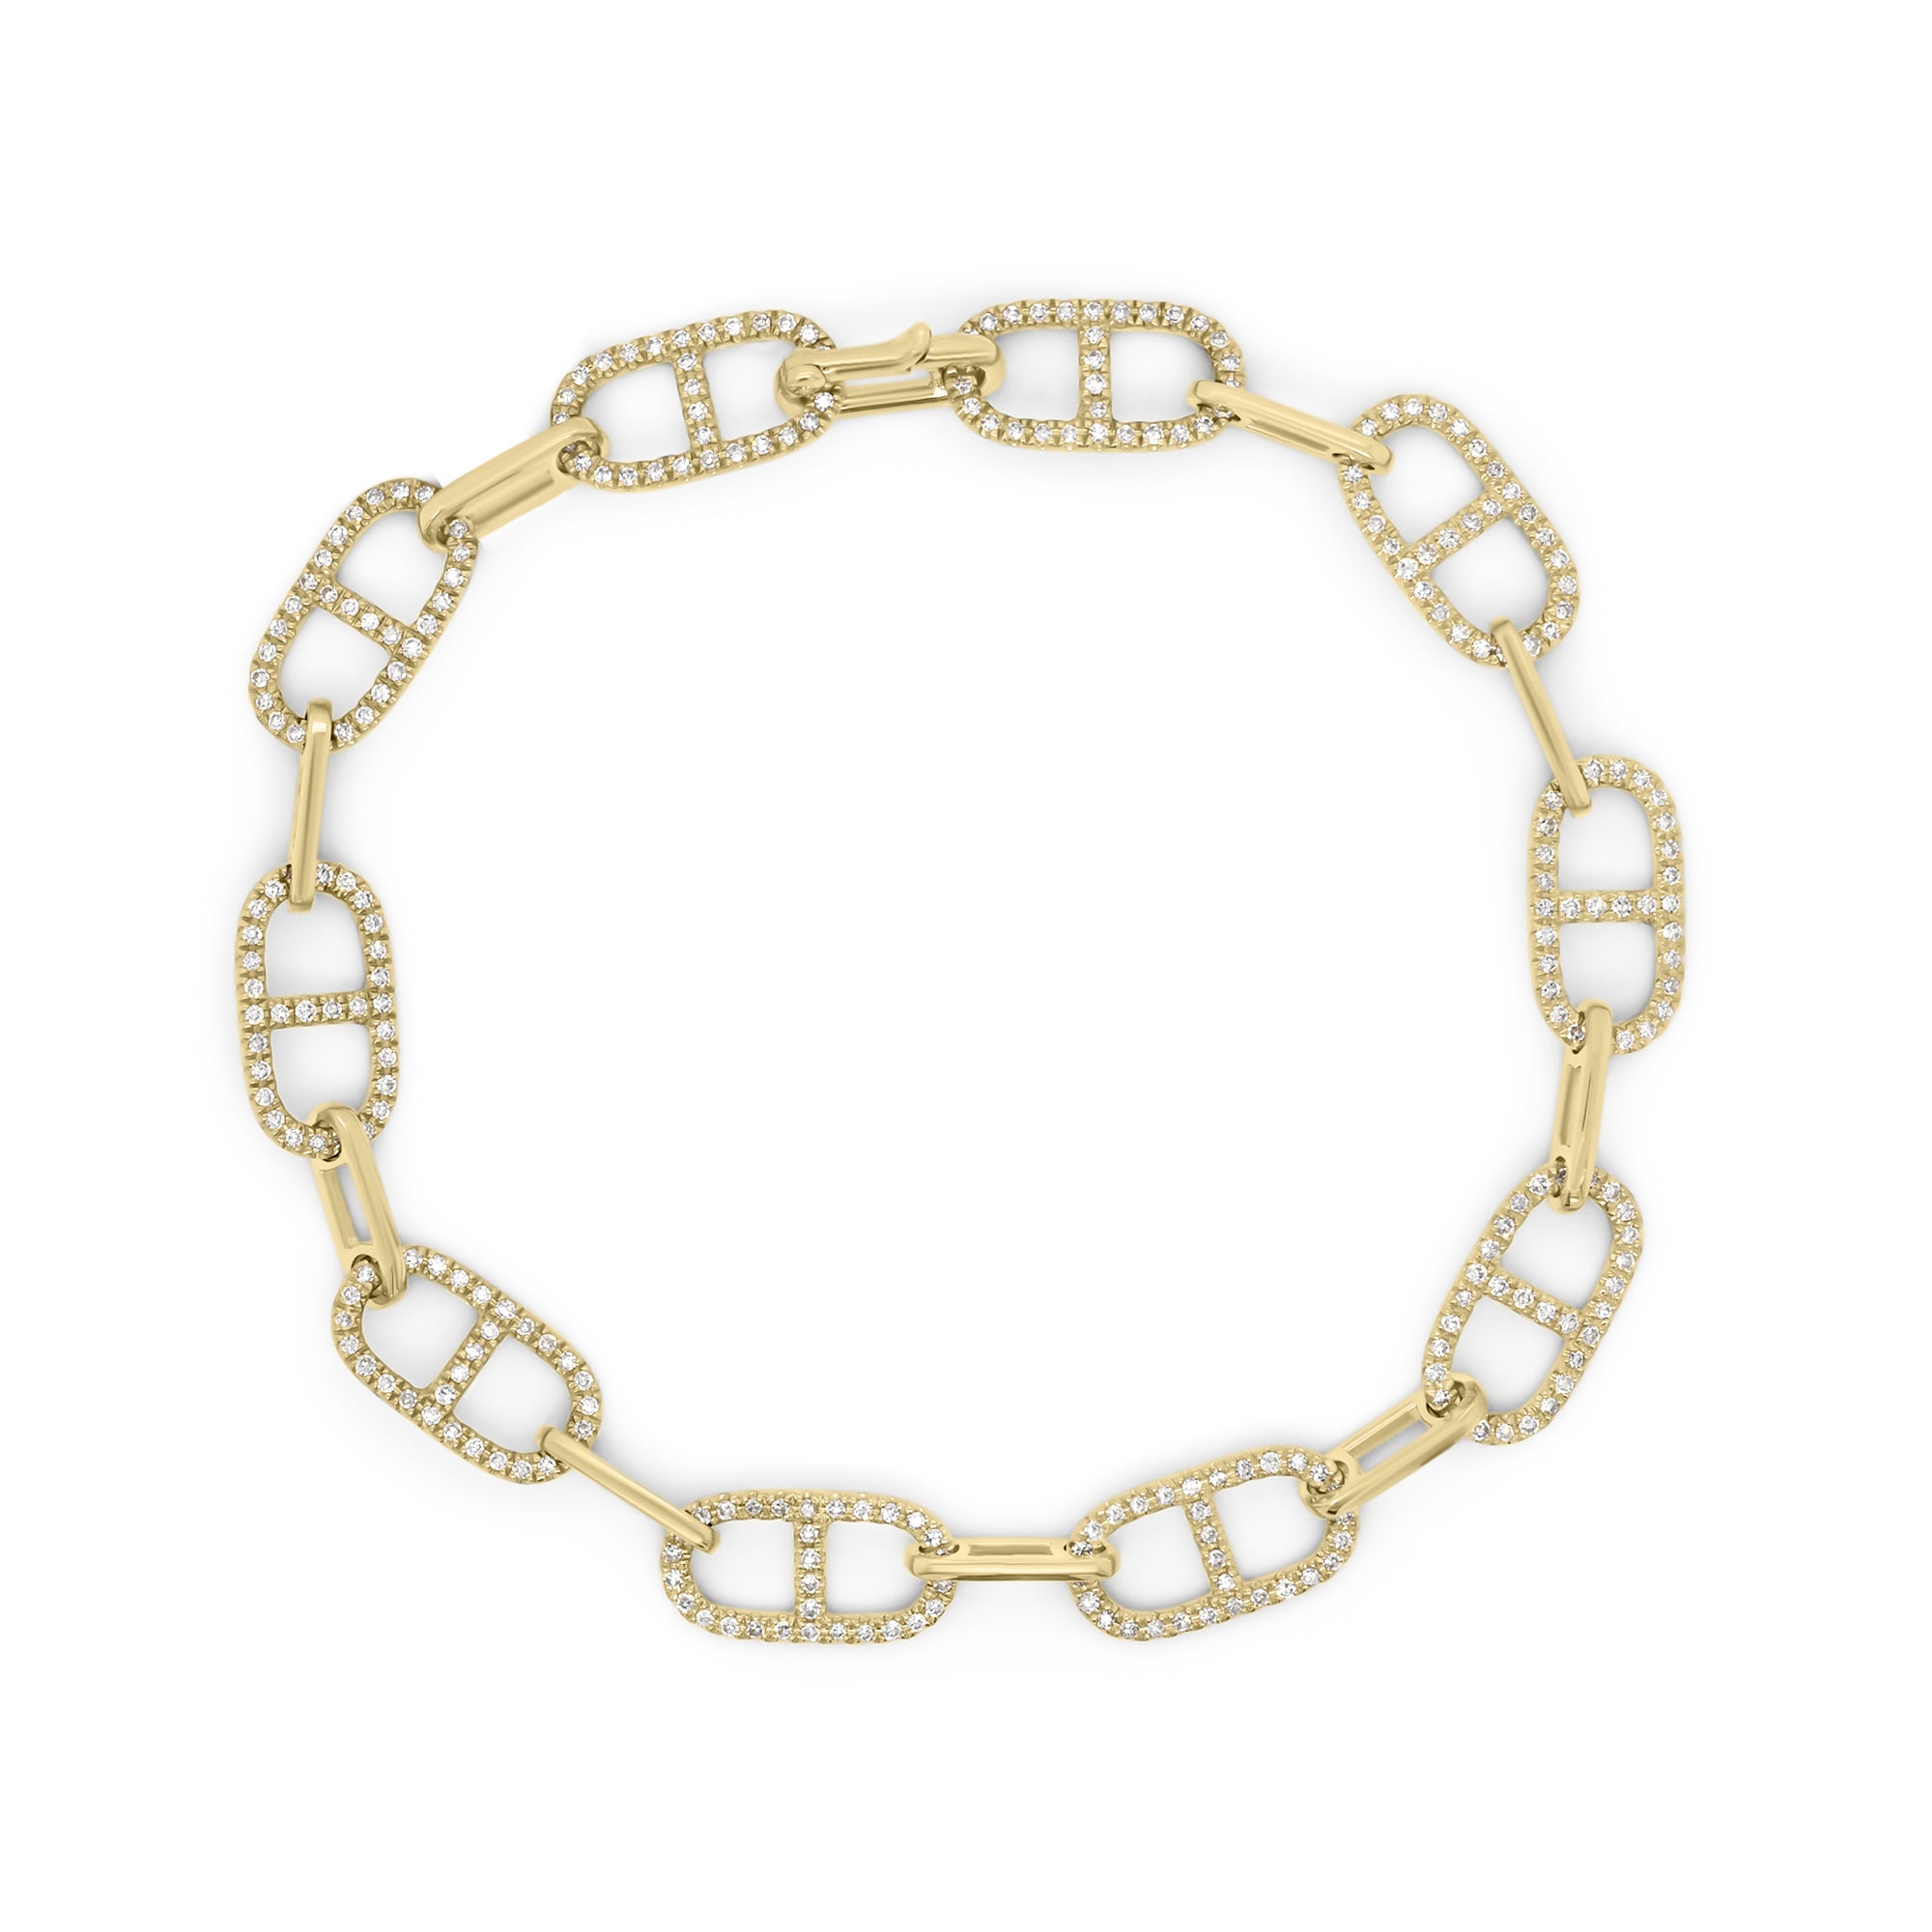 Diamond Tri-Link Bracelet - 14K yellow gold weighing 5.64 grams - 300 round diamonds totaling 0.73 carats